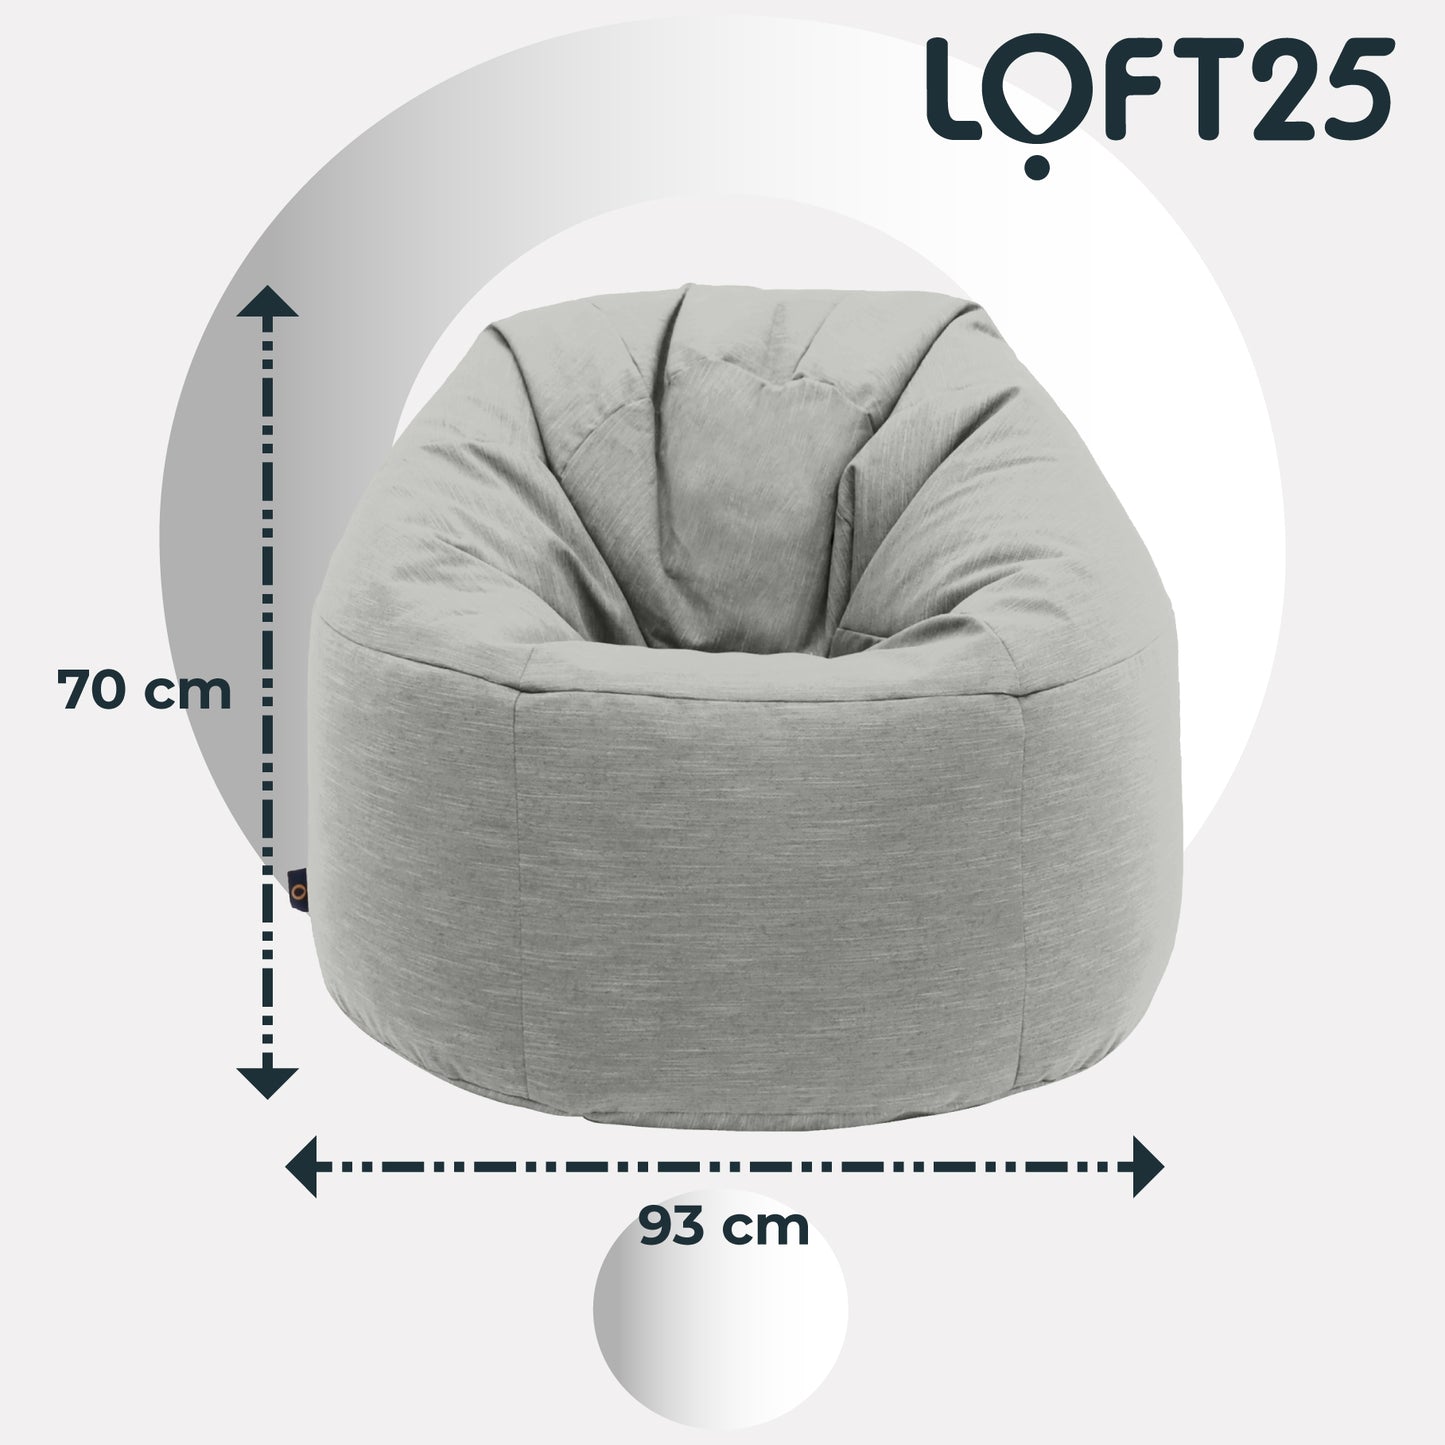 Loft 25 Round Bean Bag Chair Adult Gaming